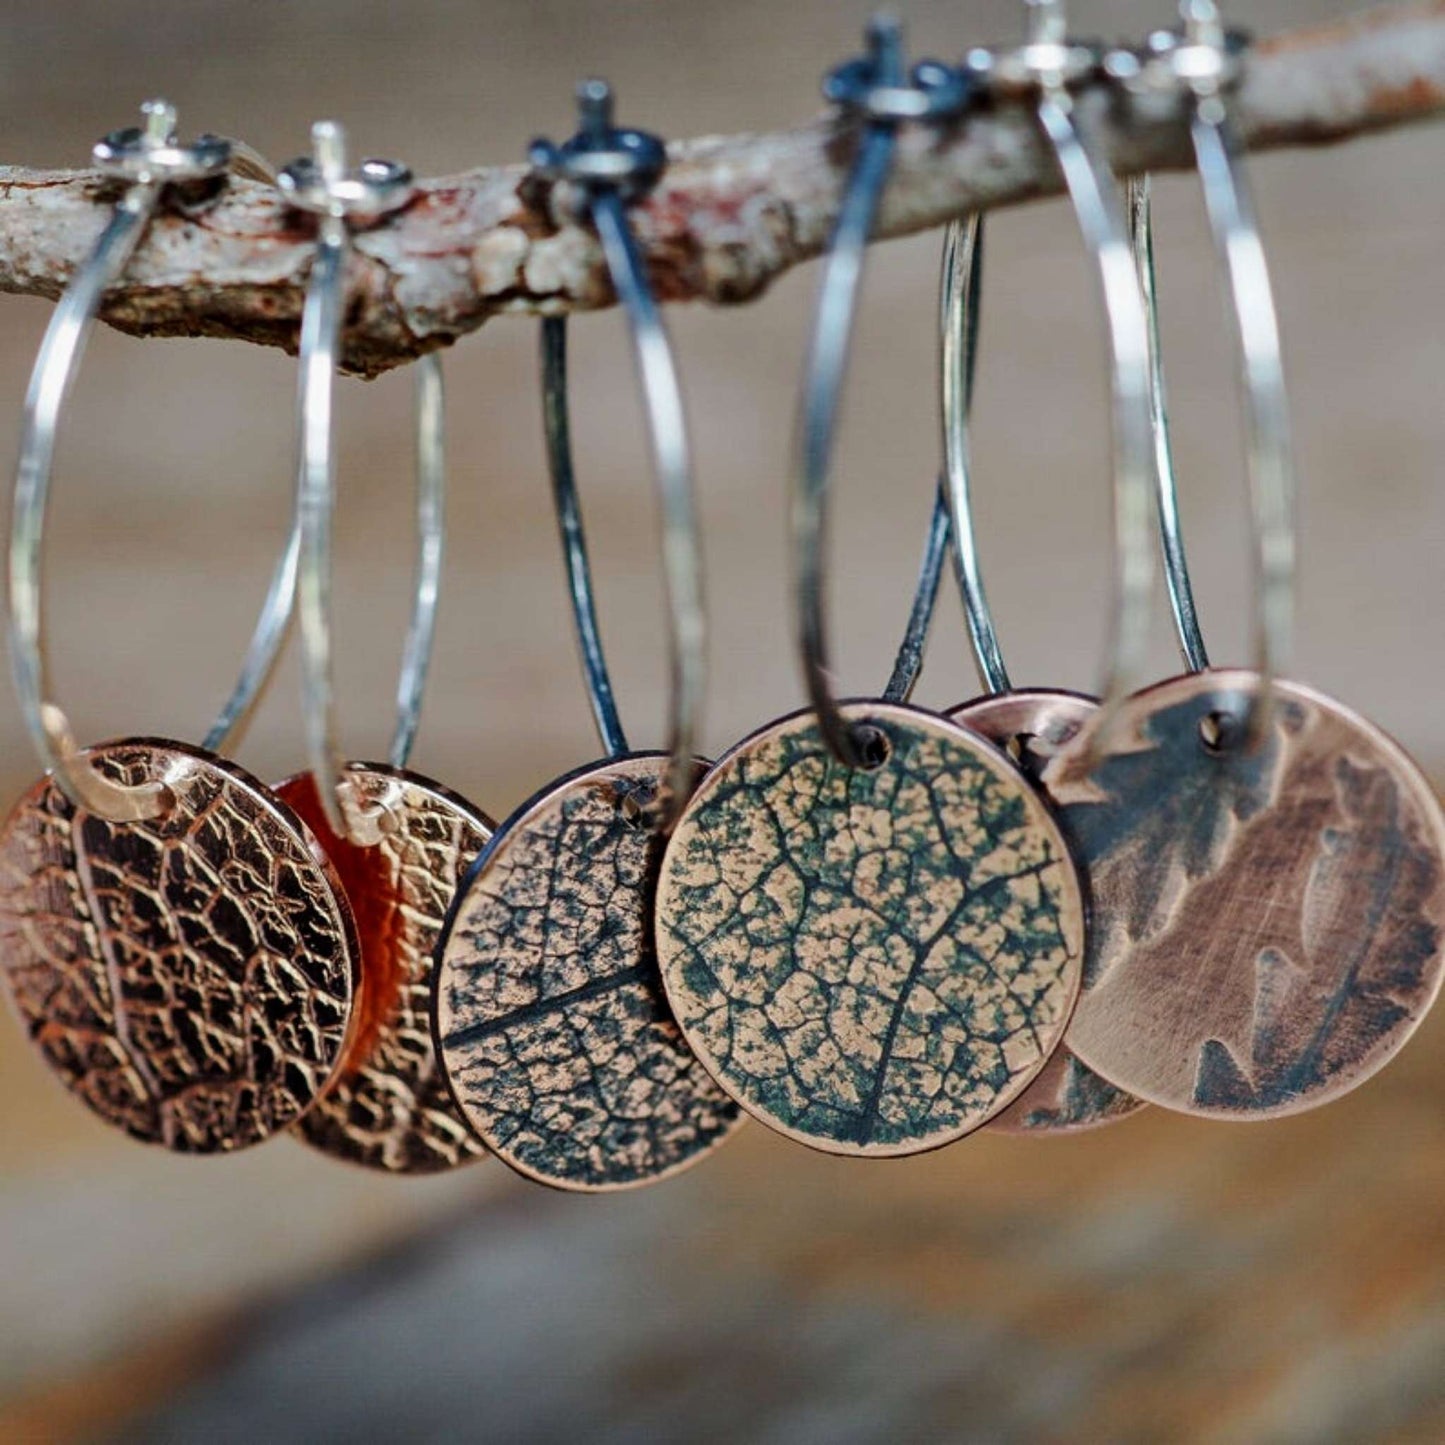 Copper leaf patterned disks on small sterling silver hoop earrings